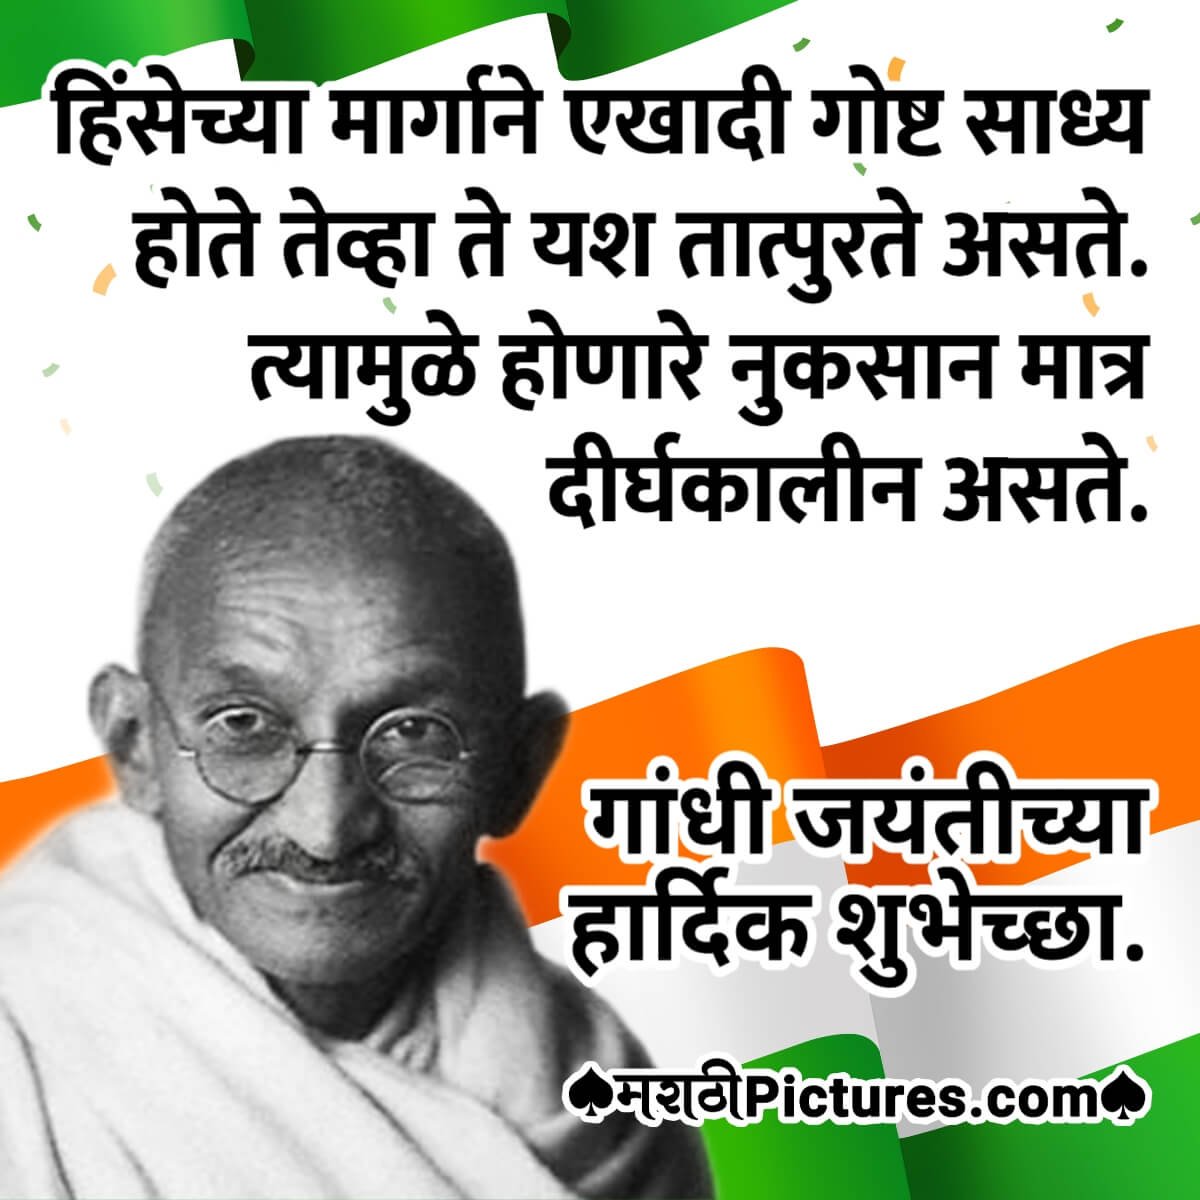 Gandhi Jayanti Marathi Quote On Violence